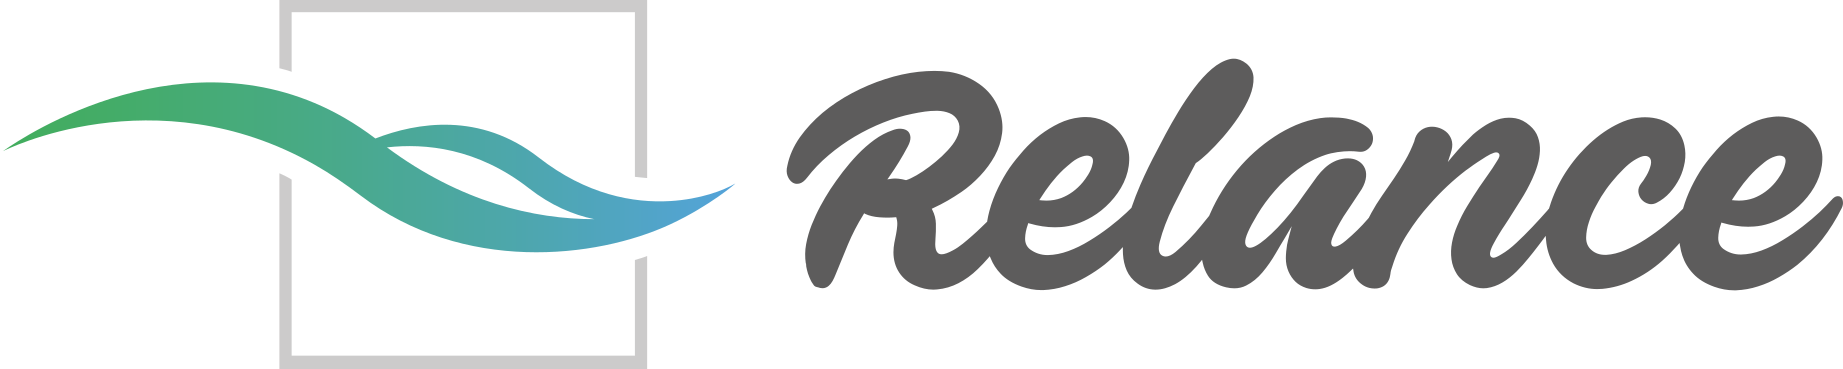 Logo Relance